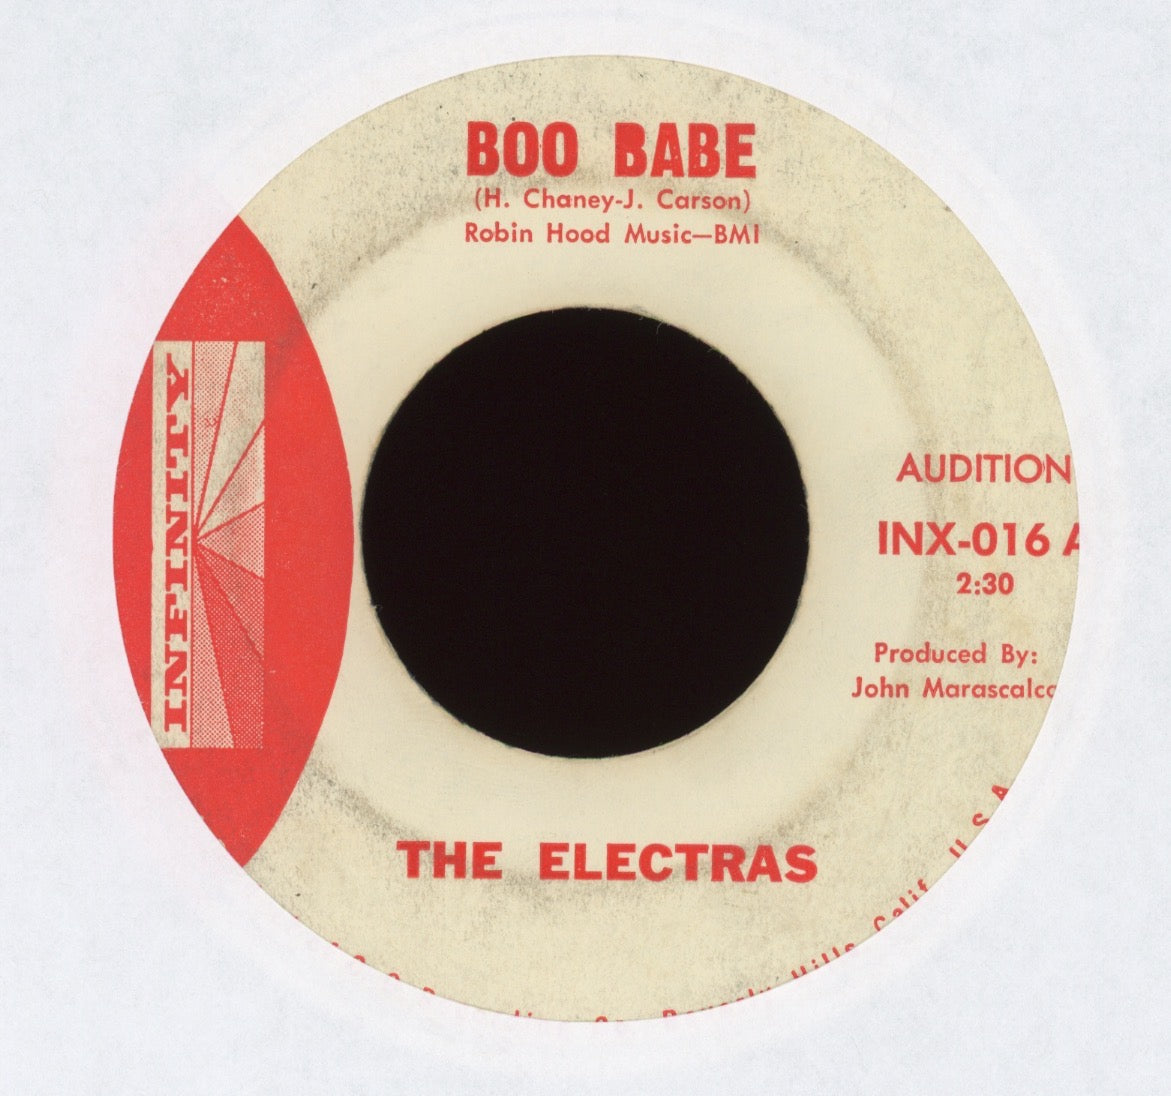 The Electras - Boo Babe on Infinity Promo R&B Doo Wop 45